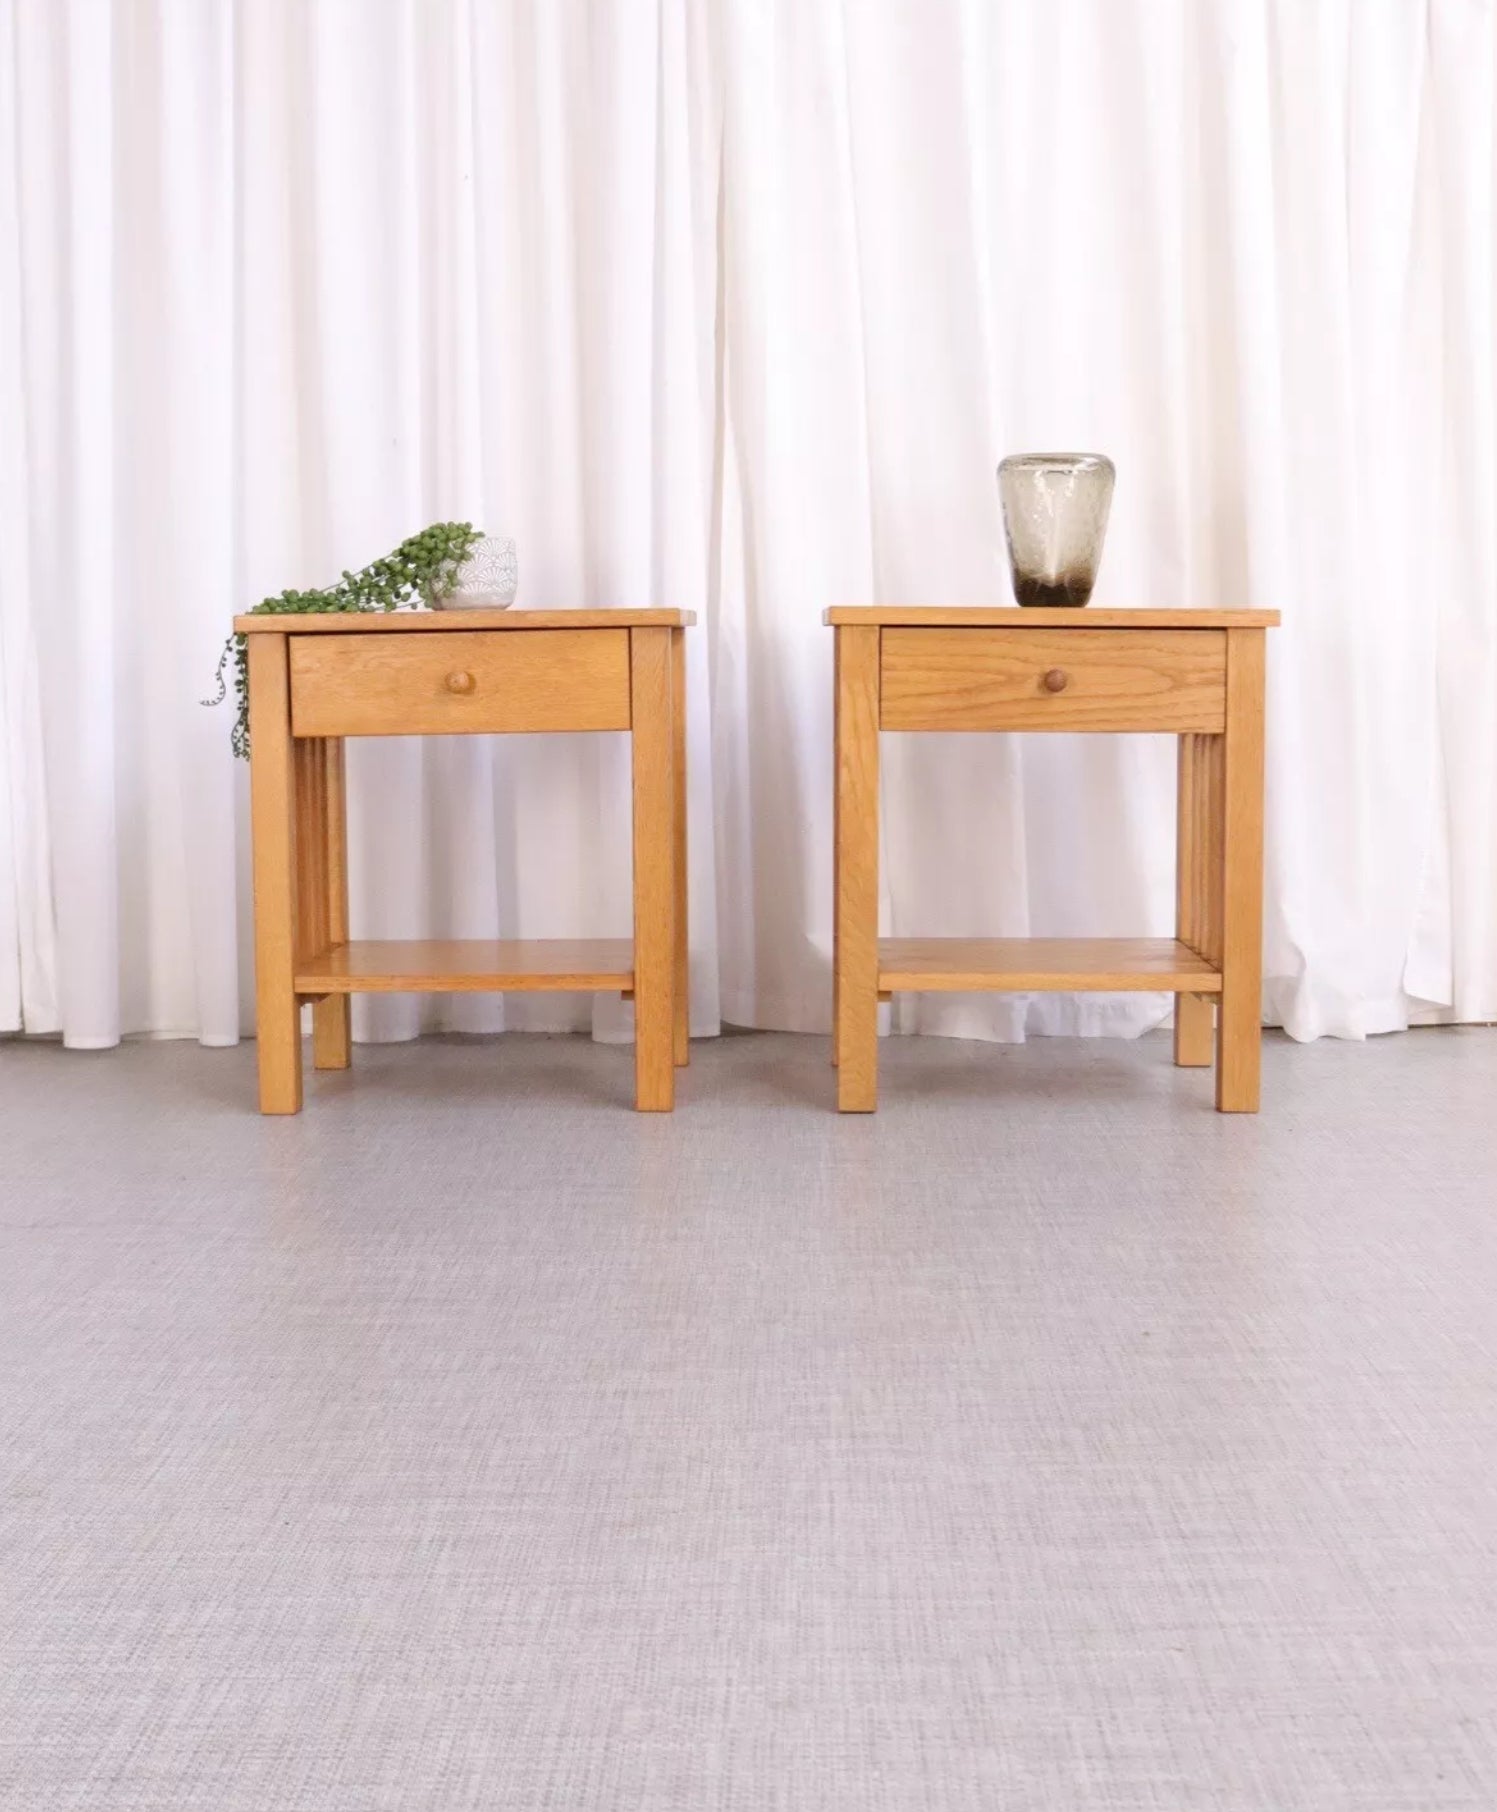 Pair of Modern Solid Oak Bedside Tables Cabinets Nightstands Great Conditions - teakyfinders